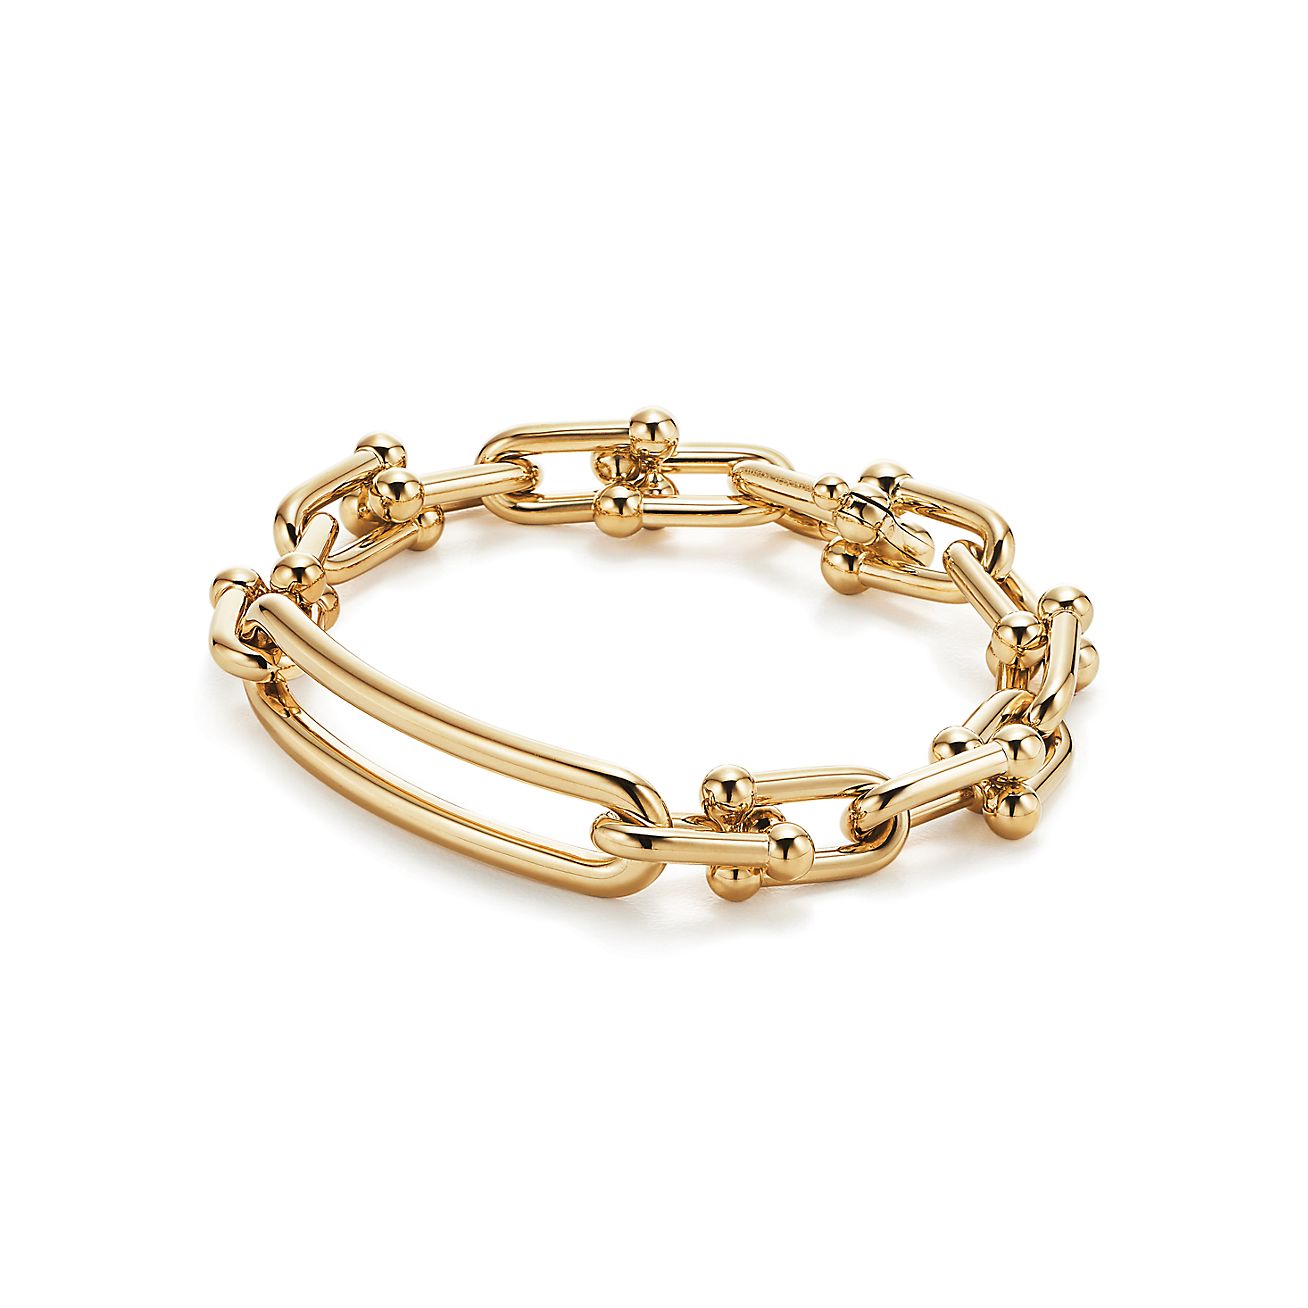 Details 160+ large chain link bracelet latest